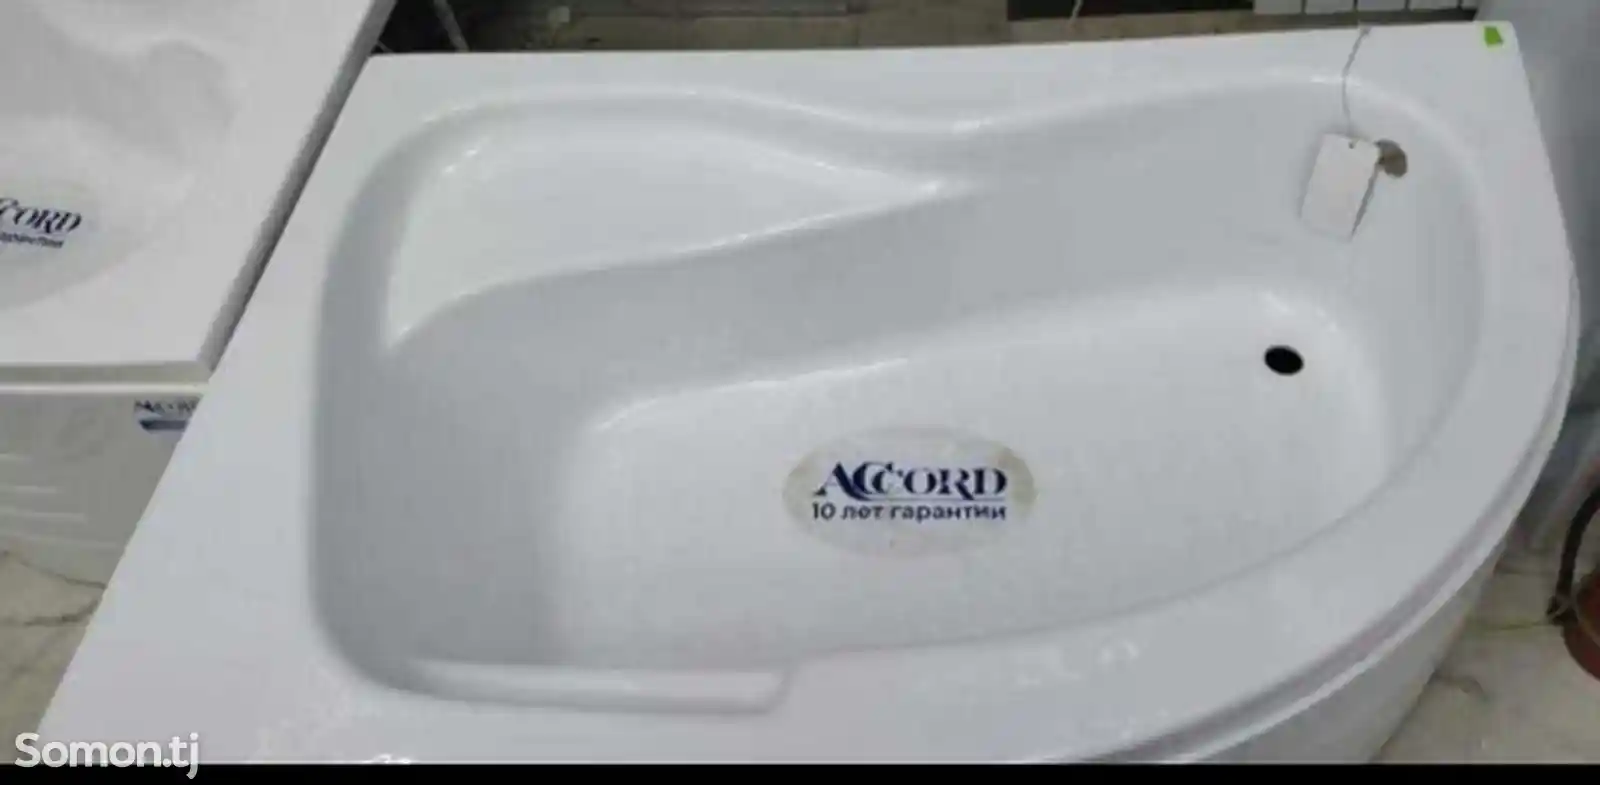 Ванна Accord 150/100см-2